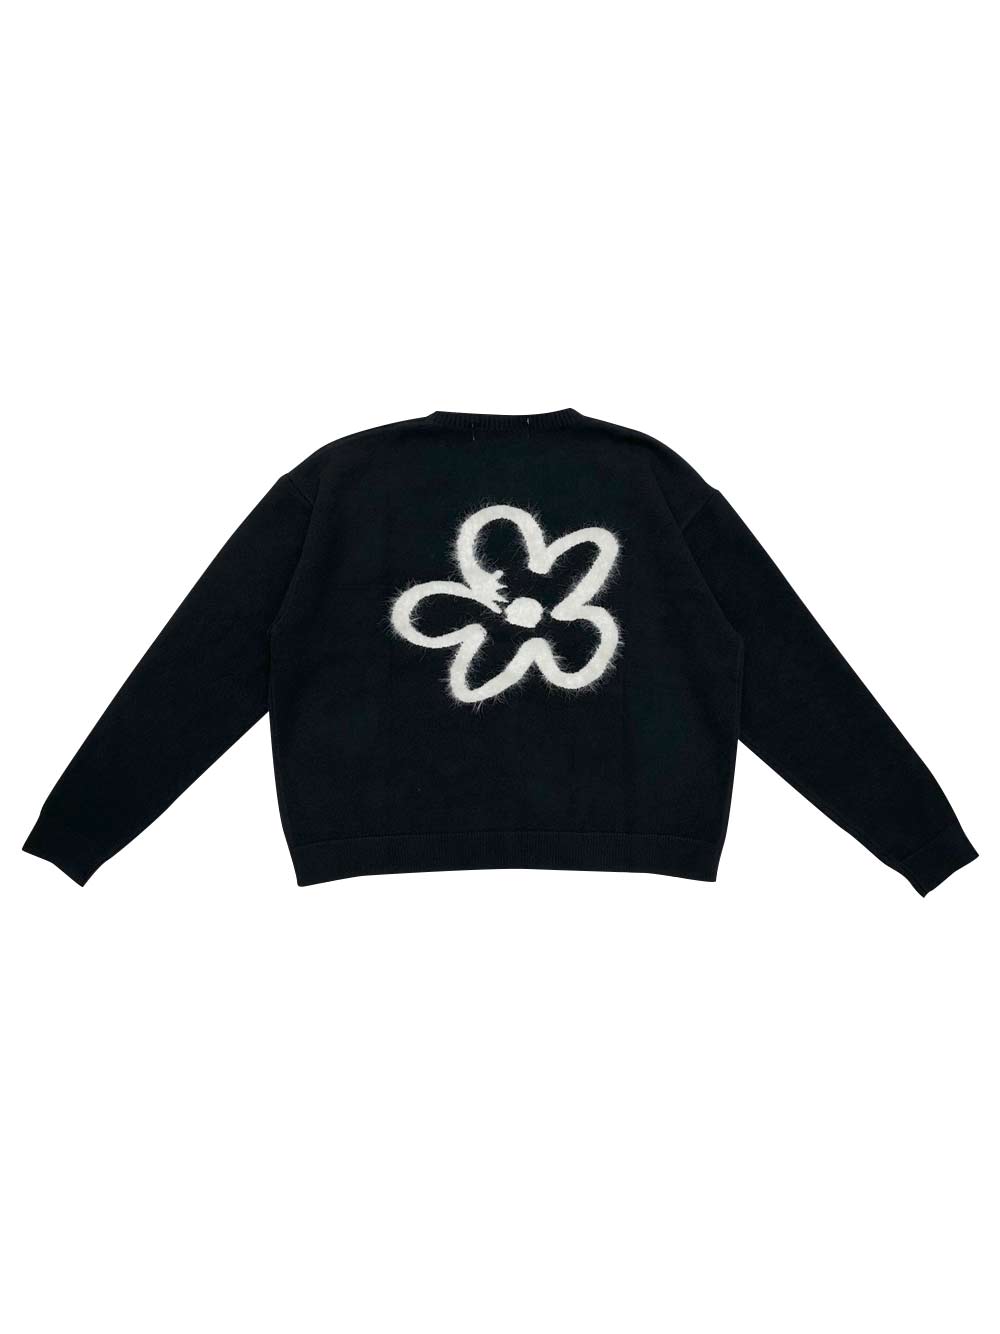 PREORDER: Flower Black Sweater